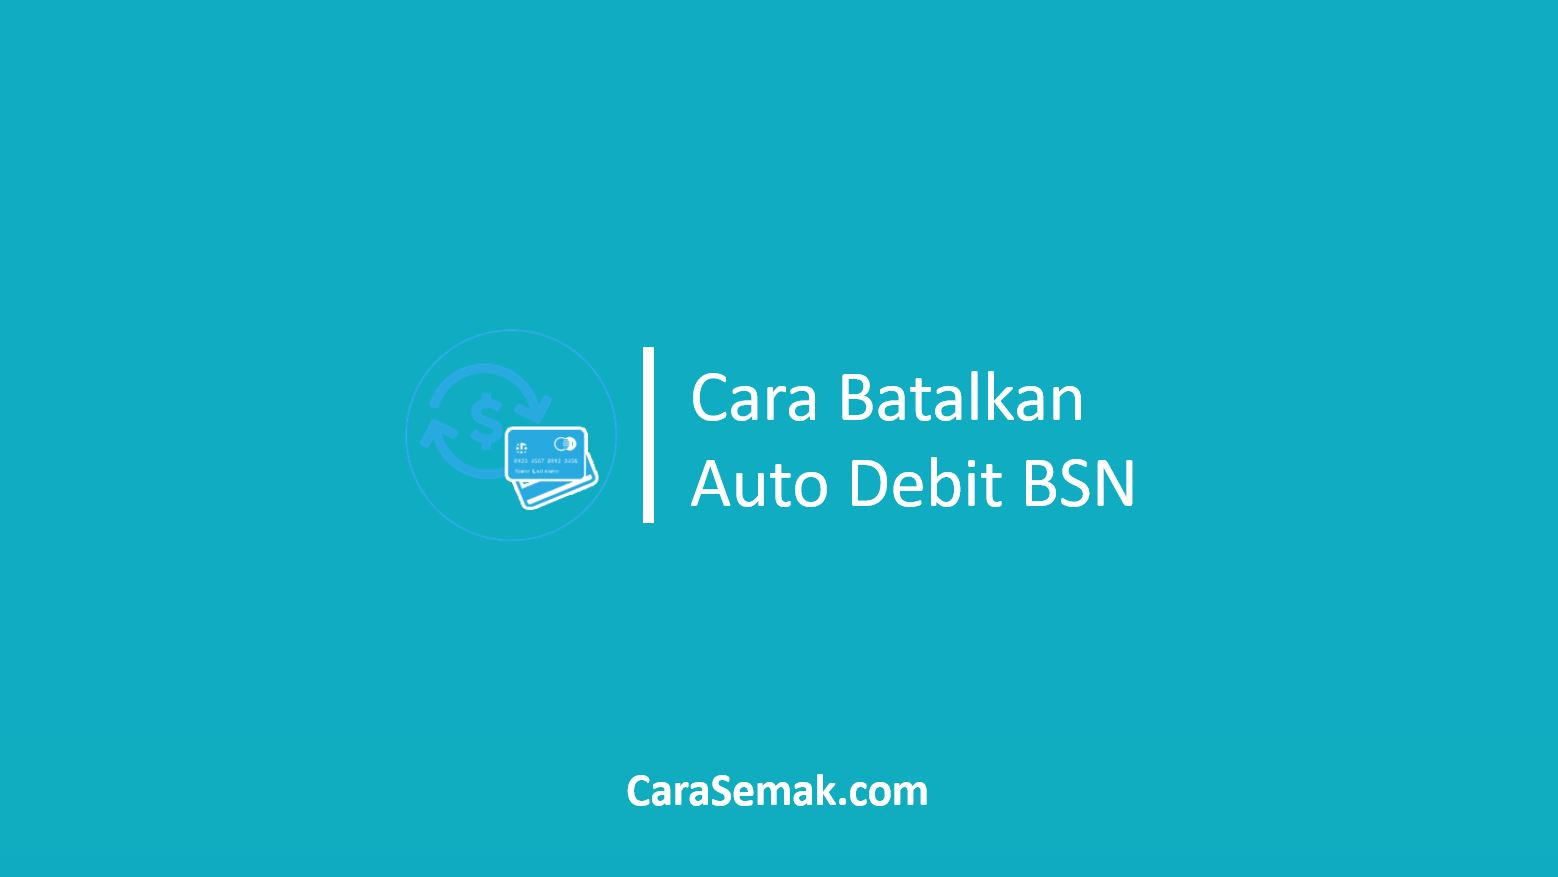 Cara Batalkan Auto Debit BSN